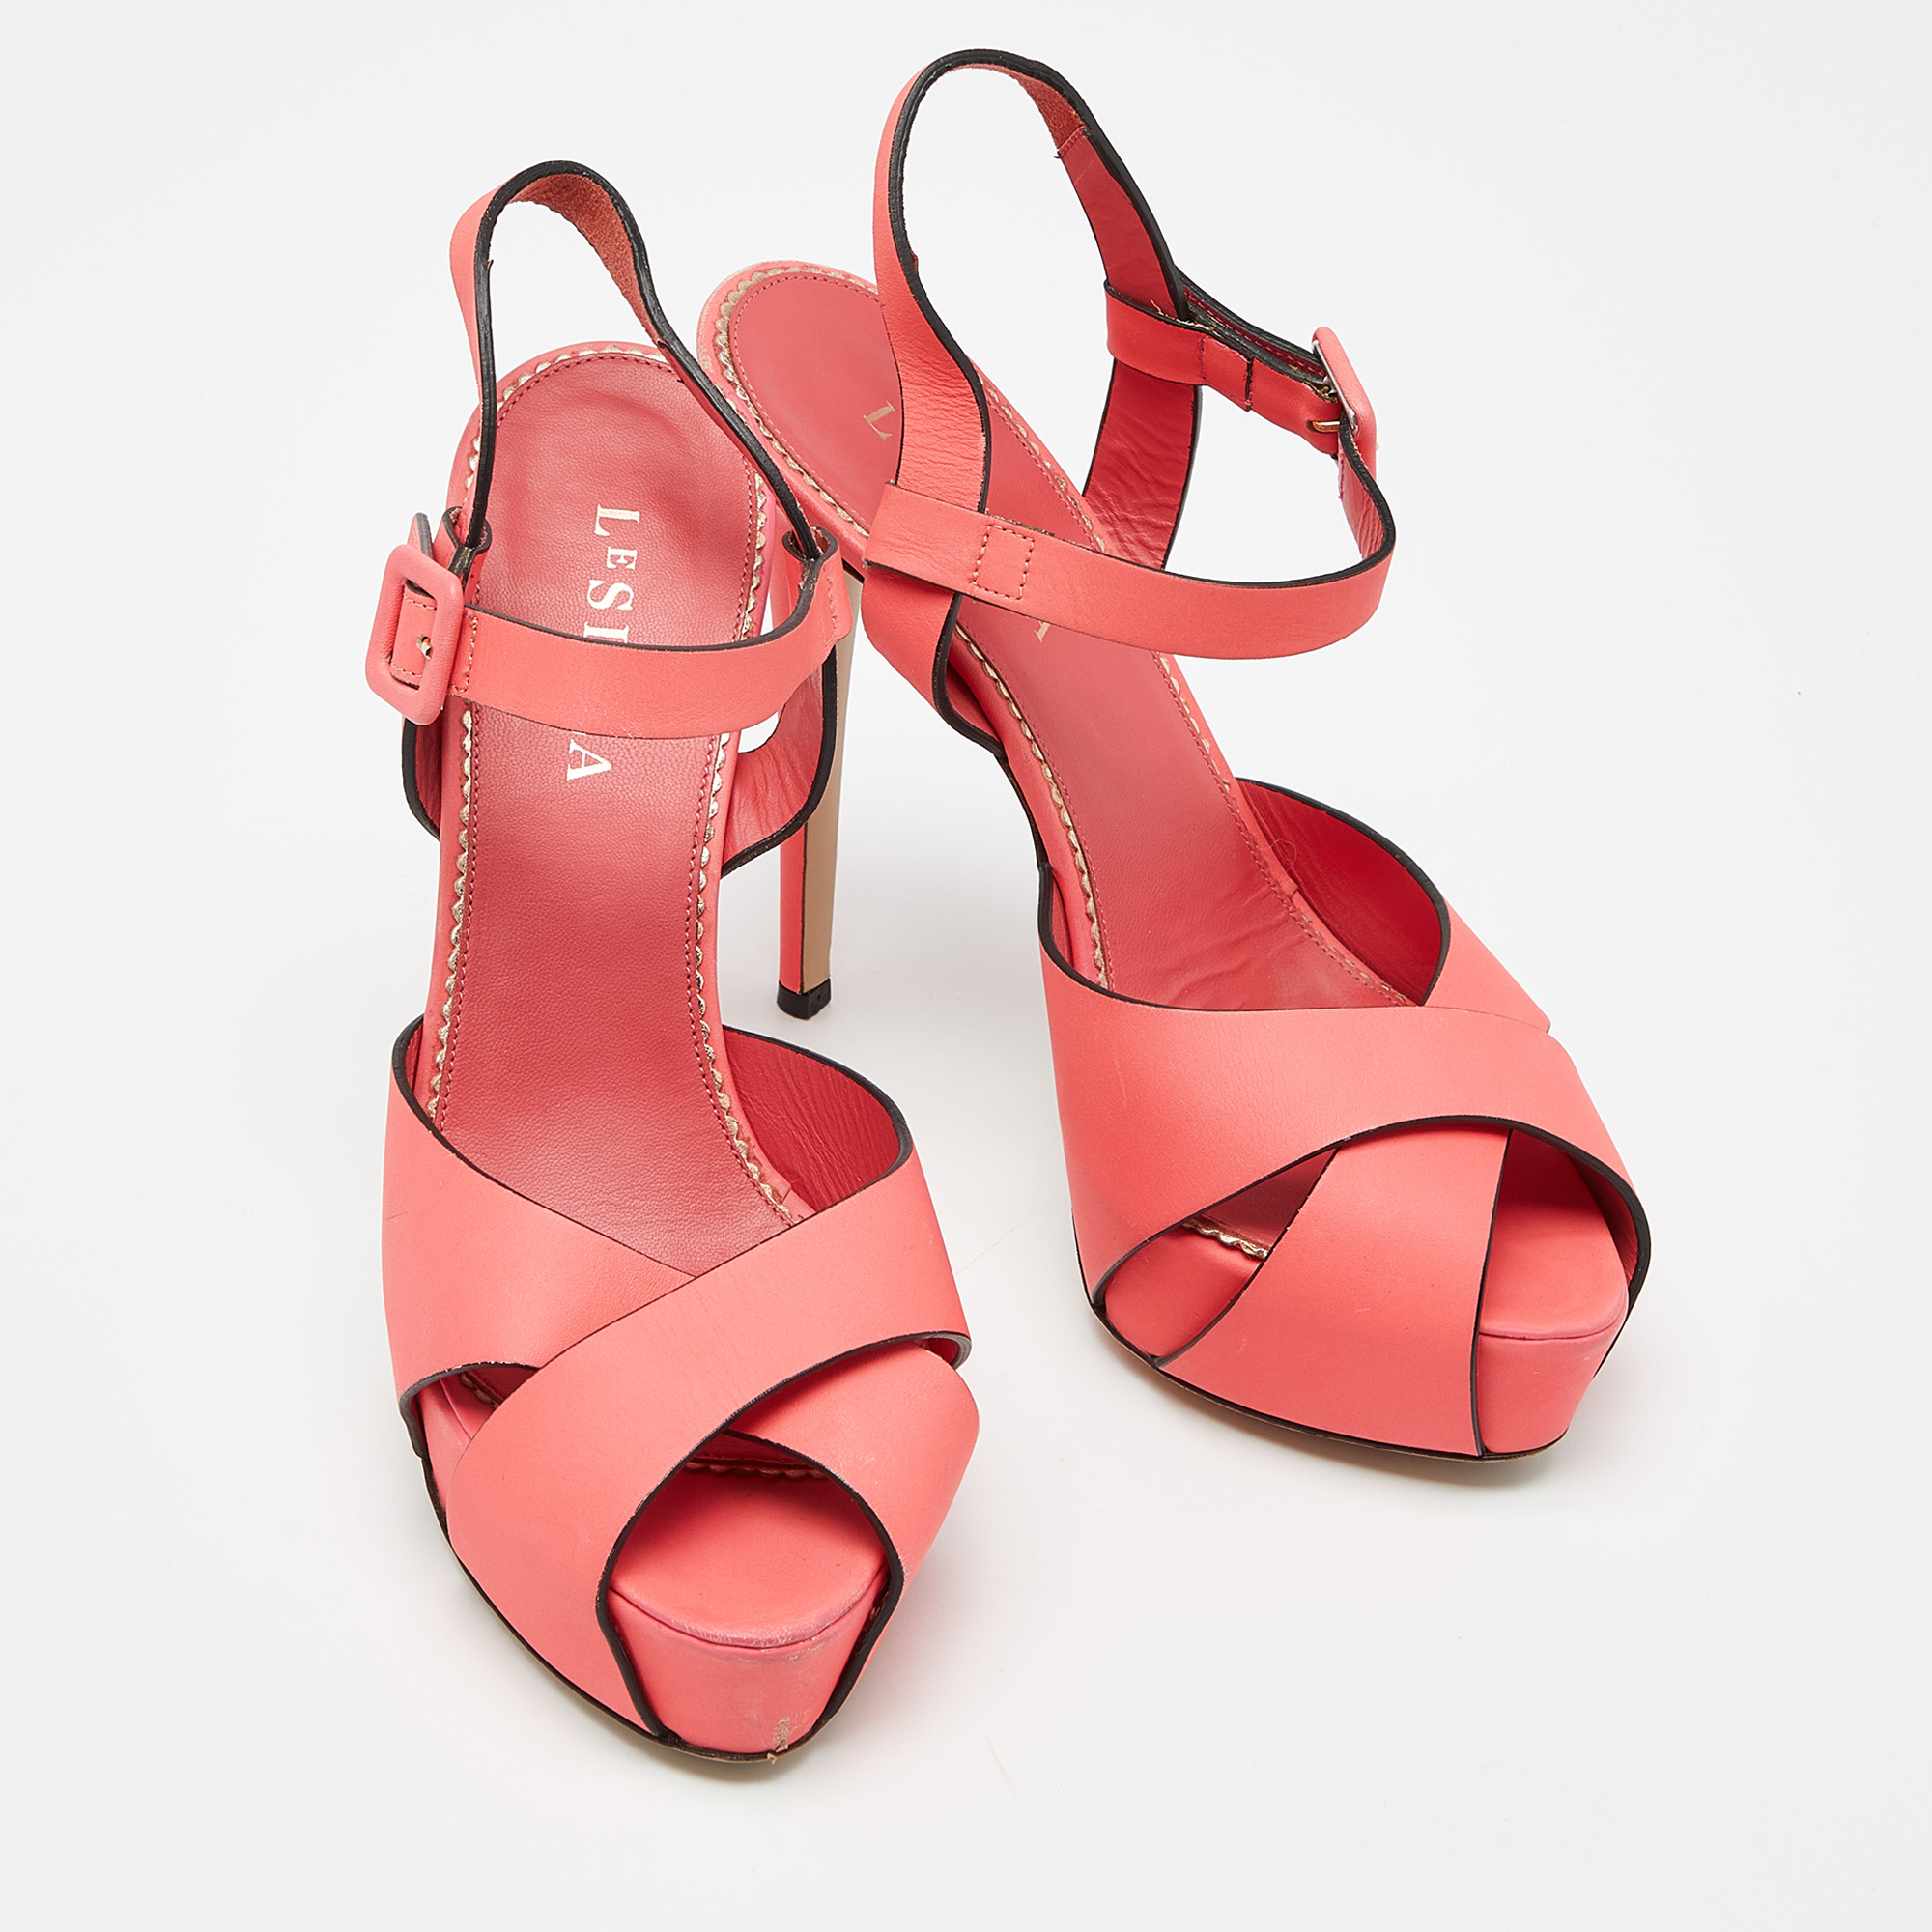 Le Silla Coral Pink Leather Ankle Strap Platform Sandals Size 39